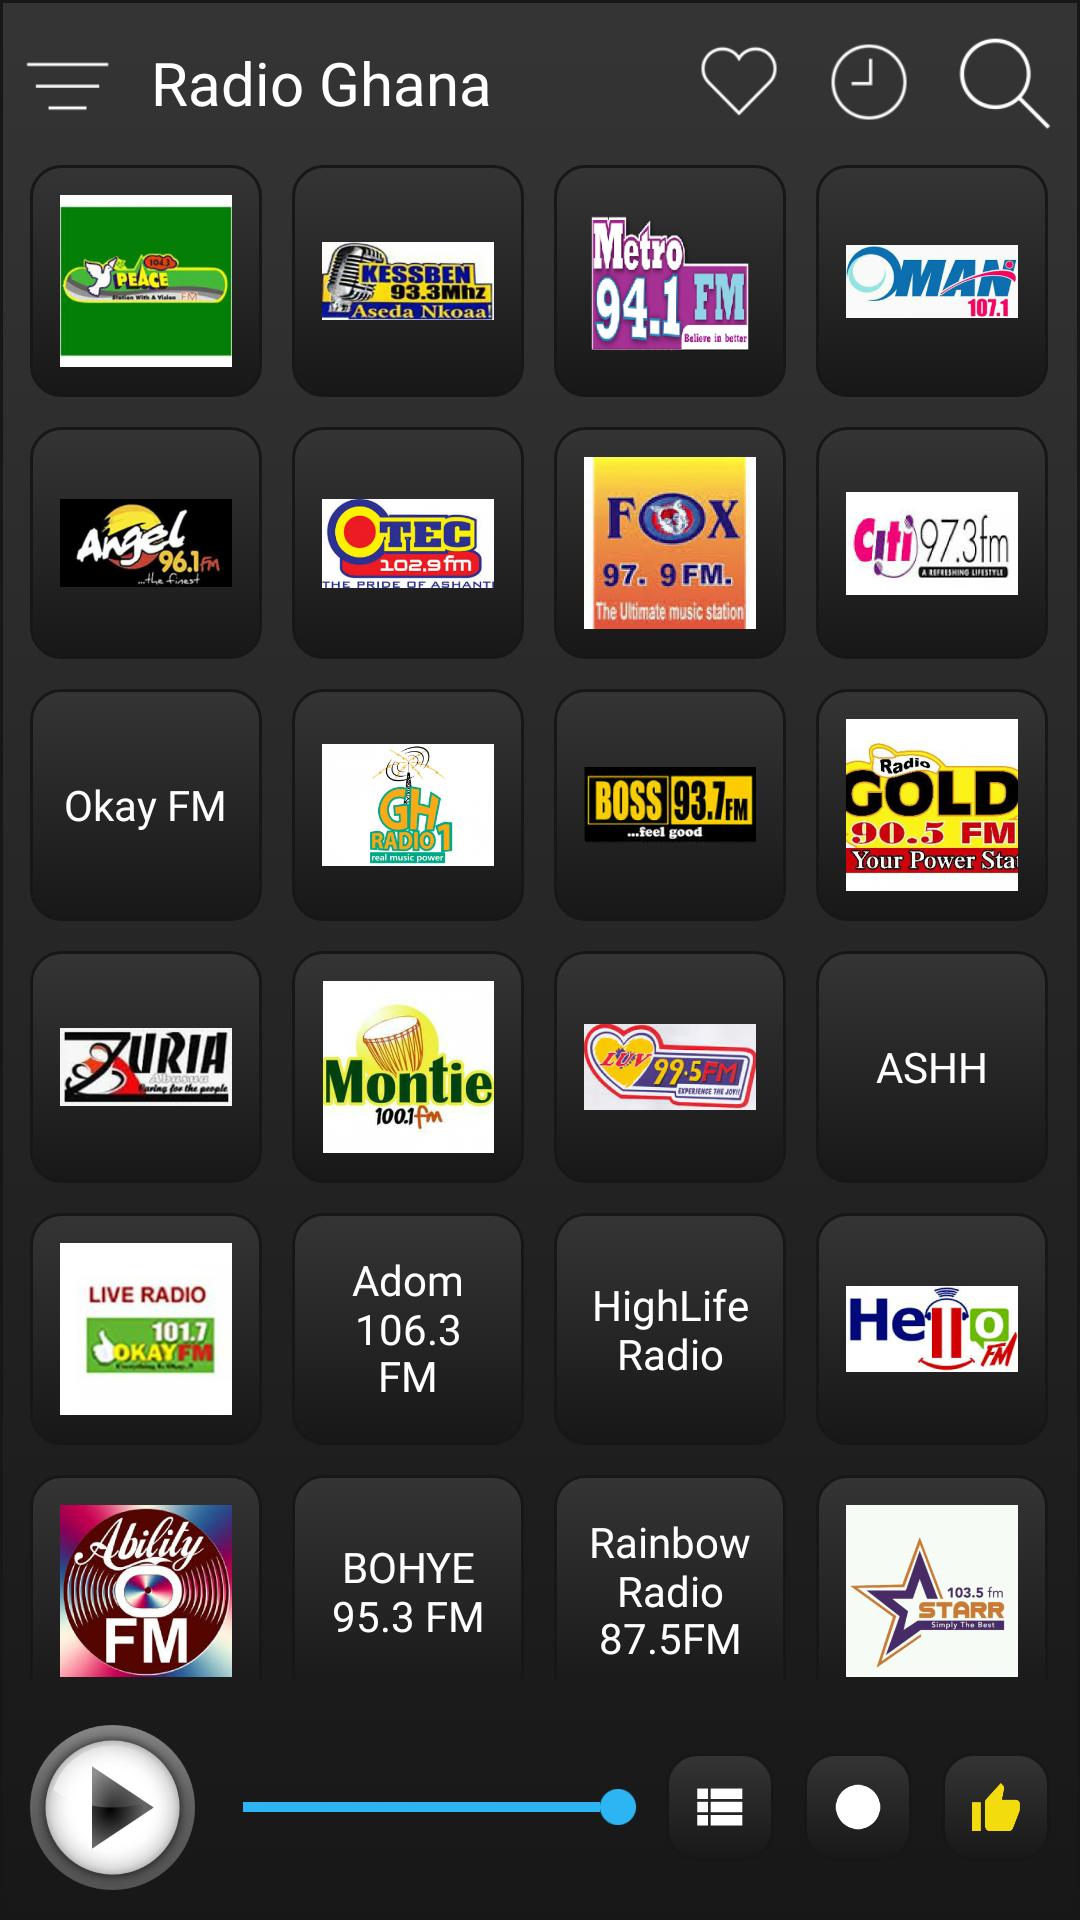 Ghana FM Radio Station Online - Ghana Music for Android - APK Download